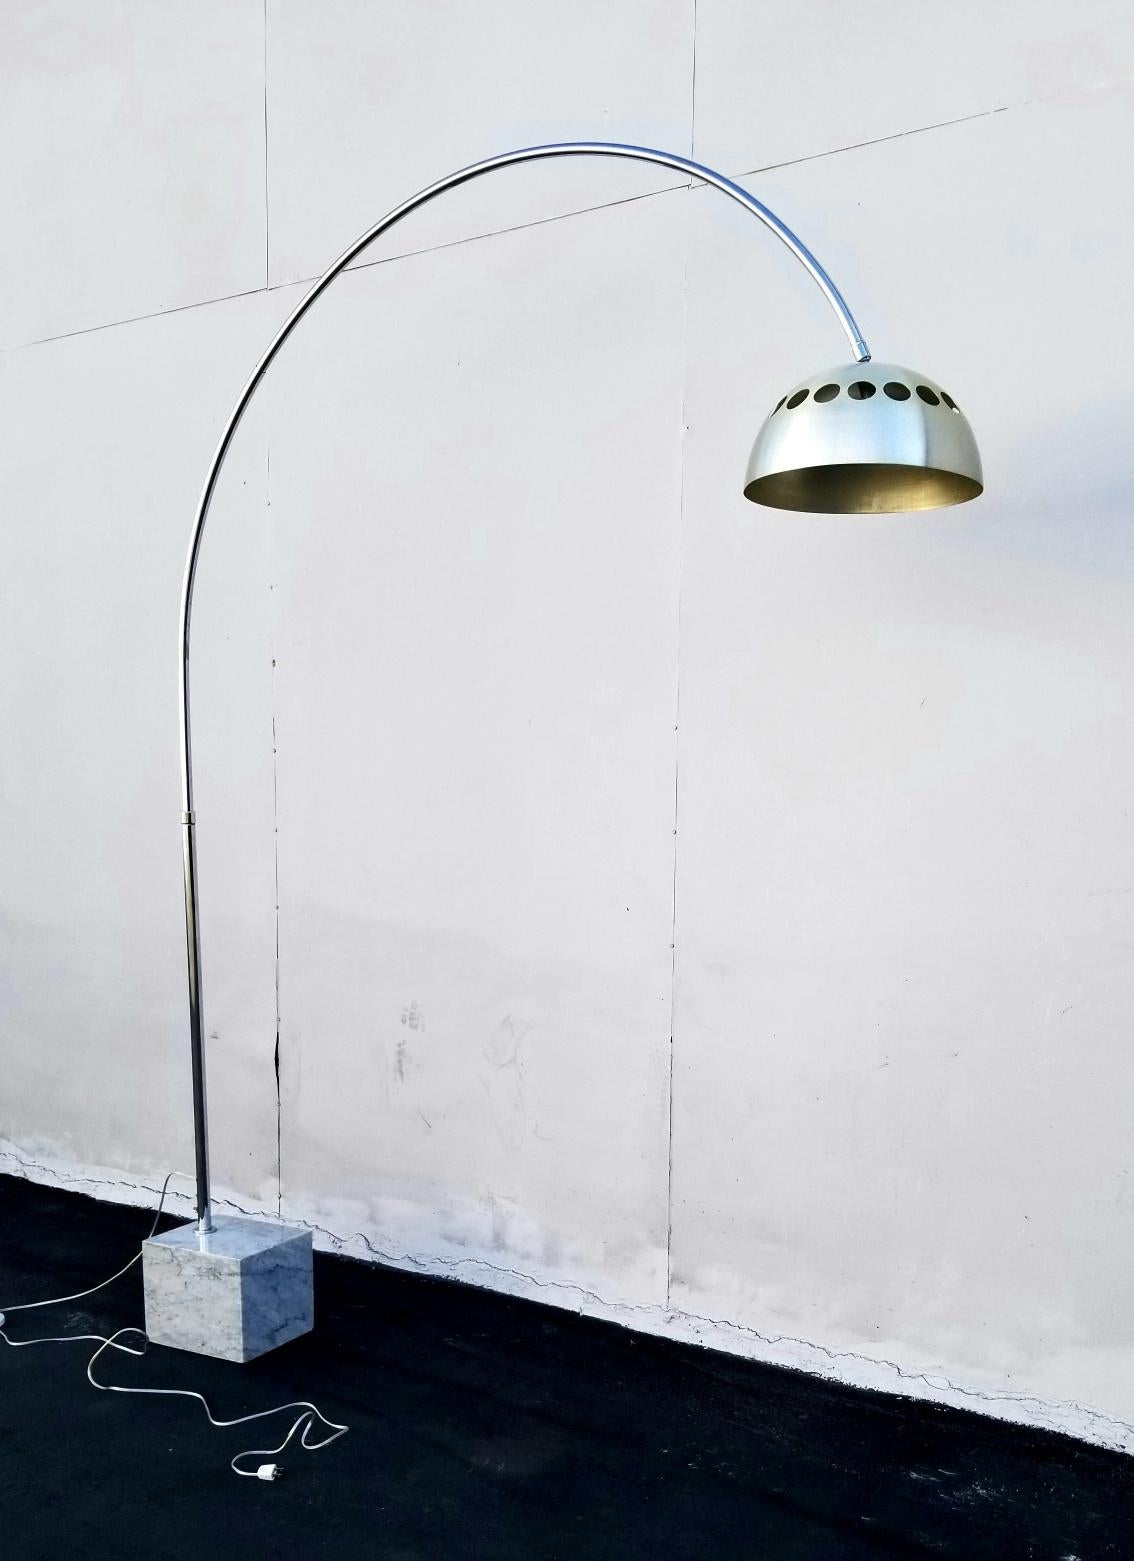 1970 s flor lamp inspired by Design Achille & Pierre Giacomo Castiglioni, 1962 .iconic 